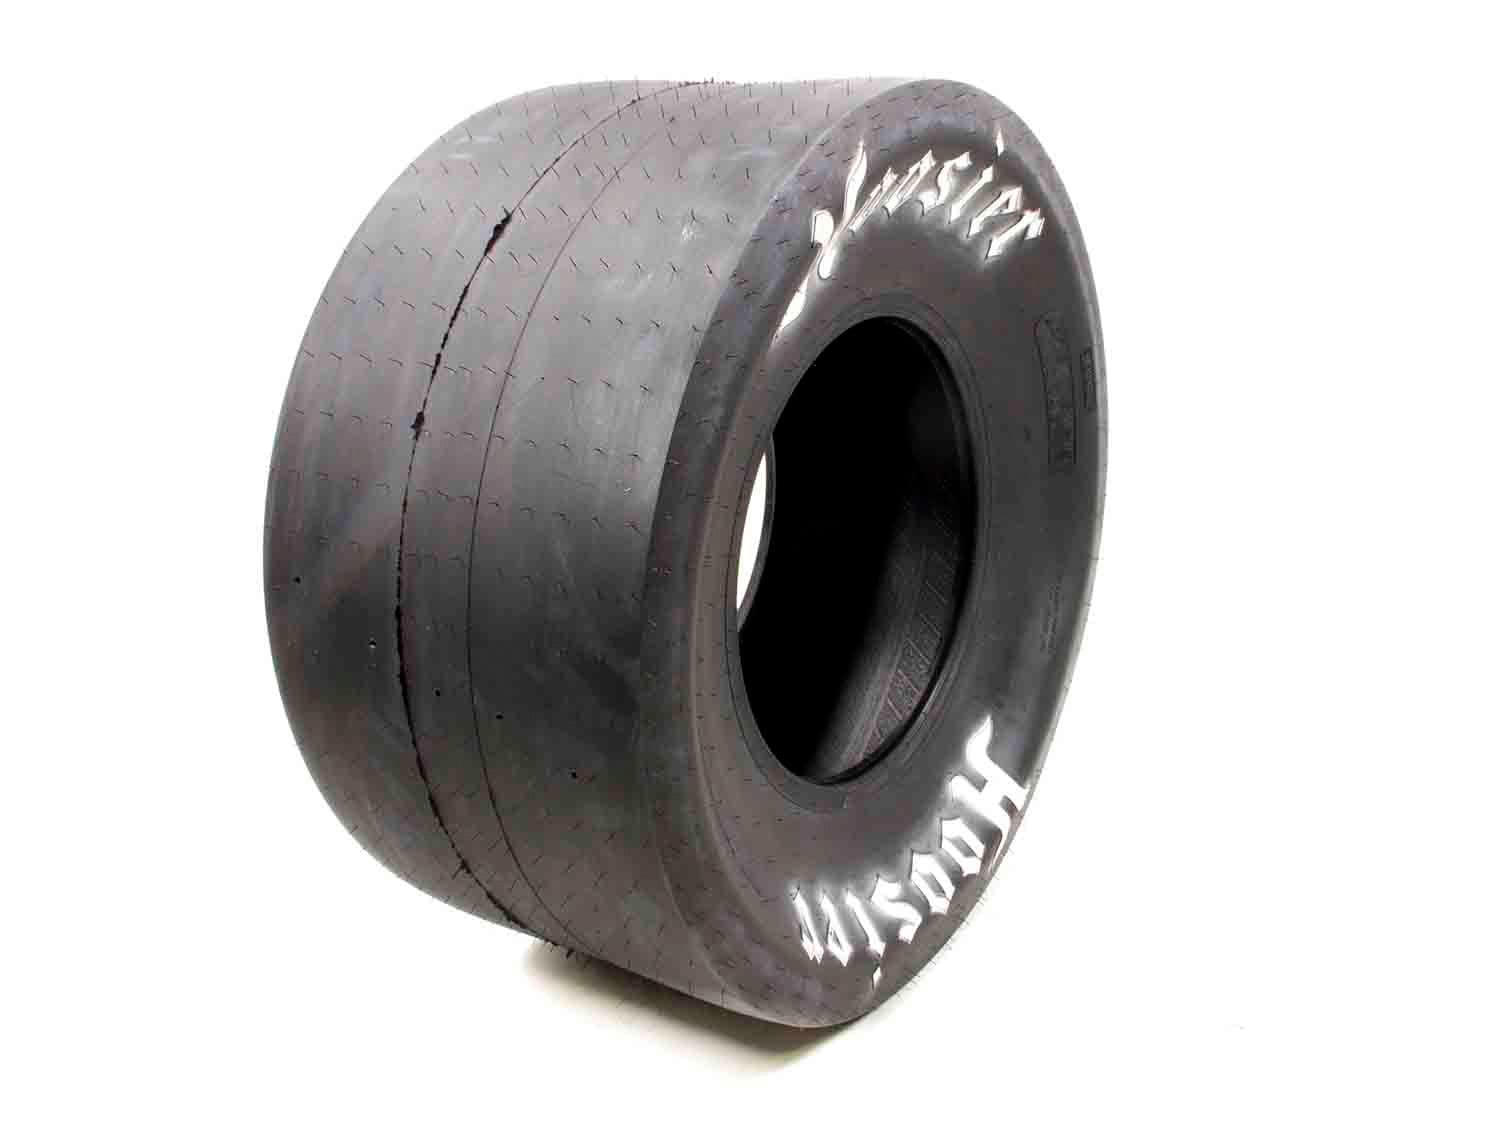 28.0/10-16 Drag Tire - Burlile Performance Products